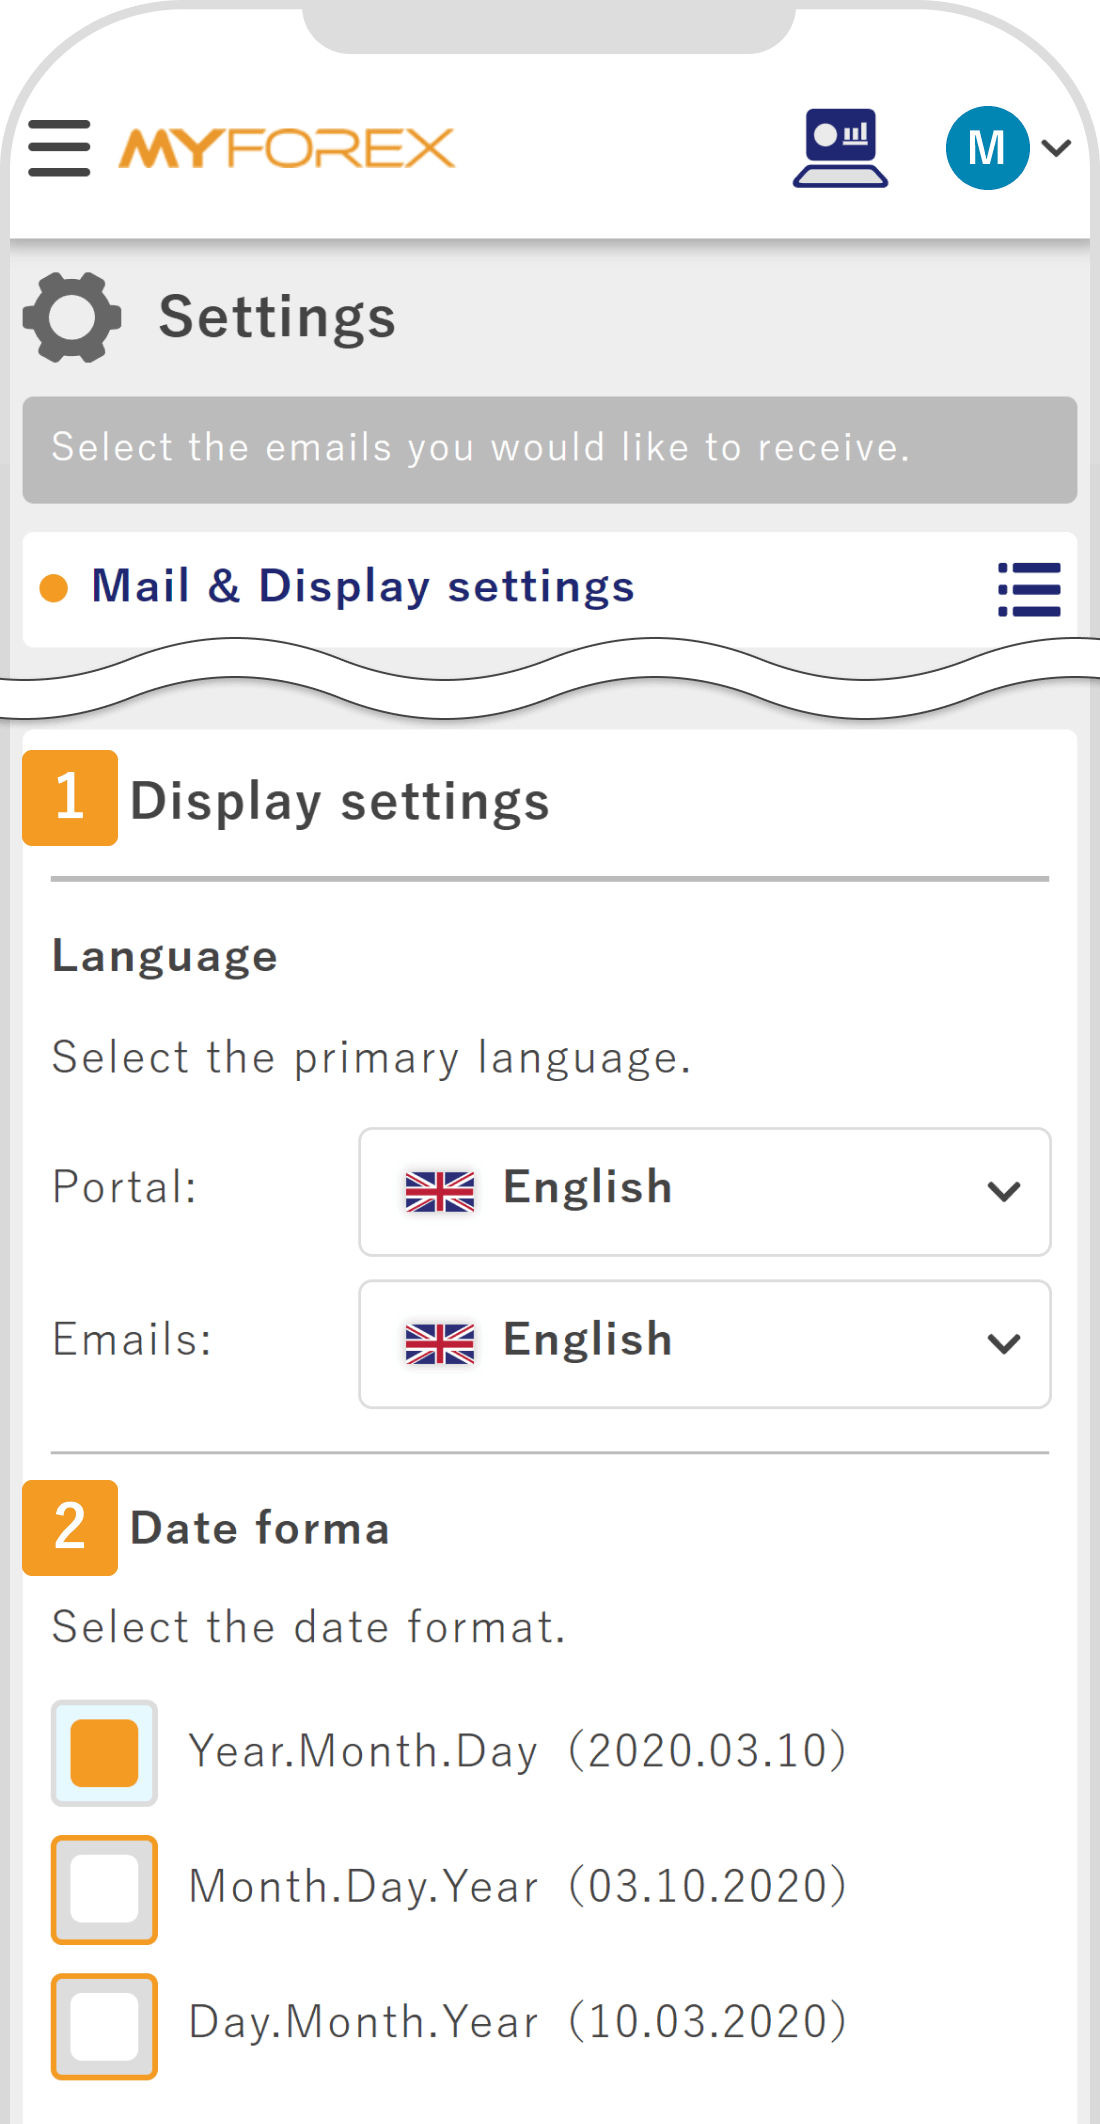 Mail & Display settings